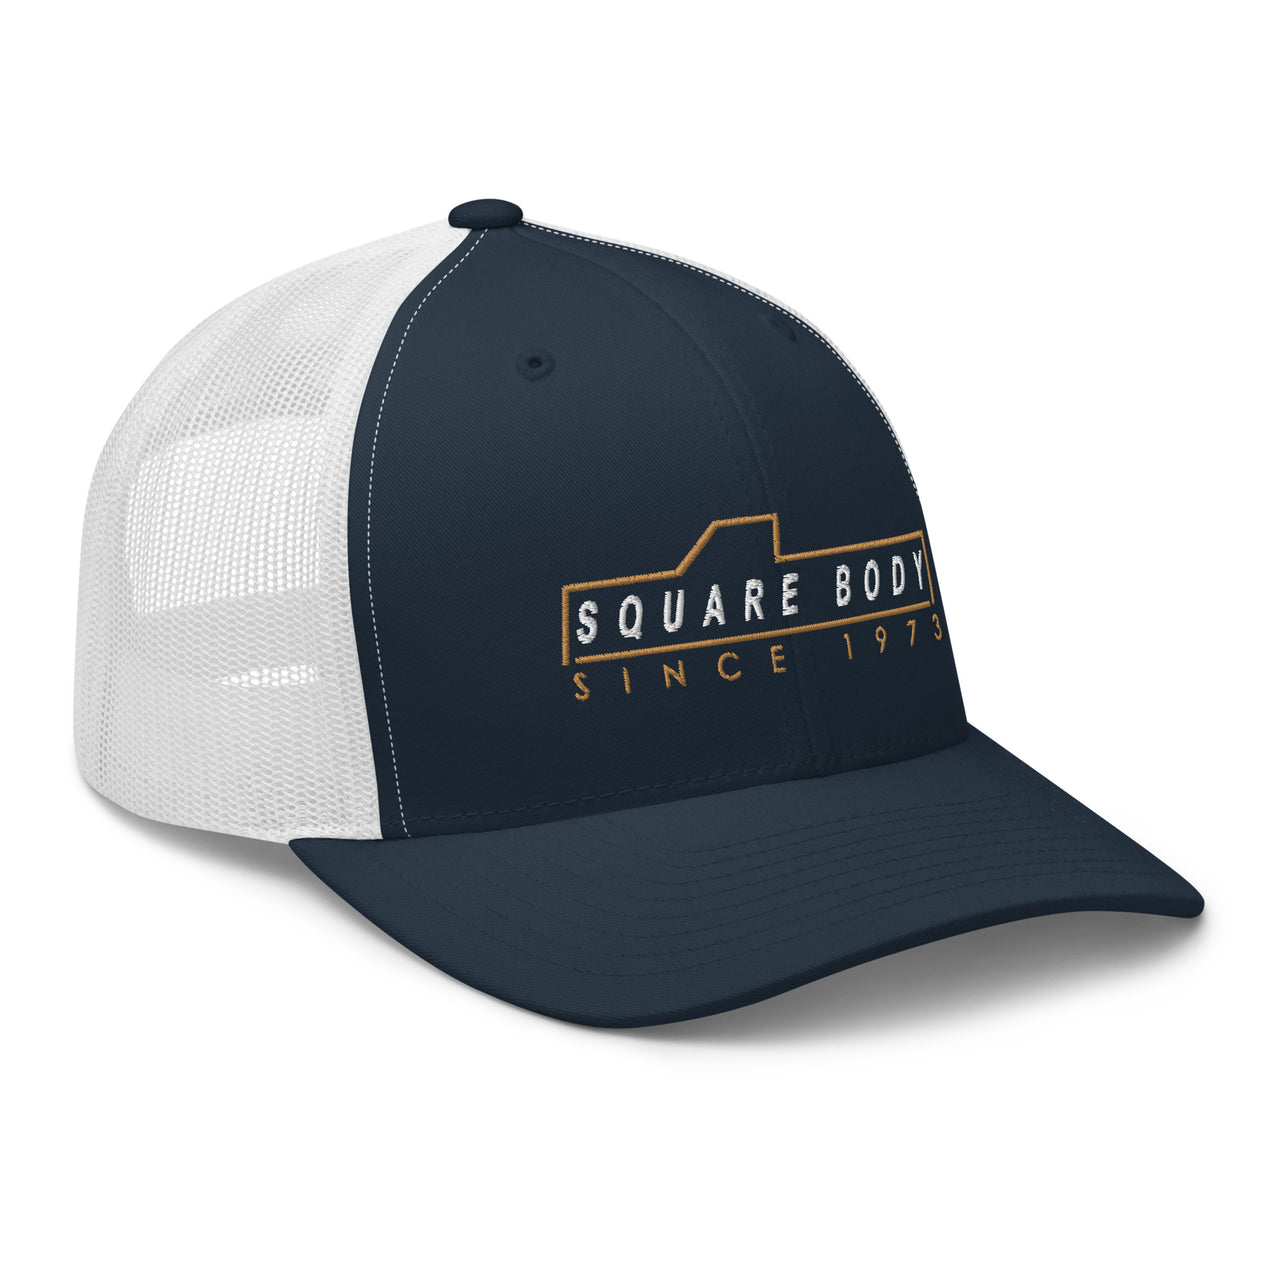 Square Body Trucker Hat Cap Square Body Since 1973-In-Black-From Aggressive Thread